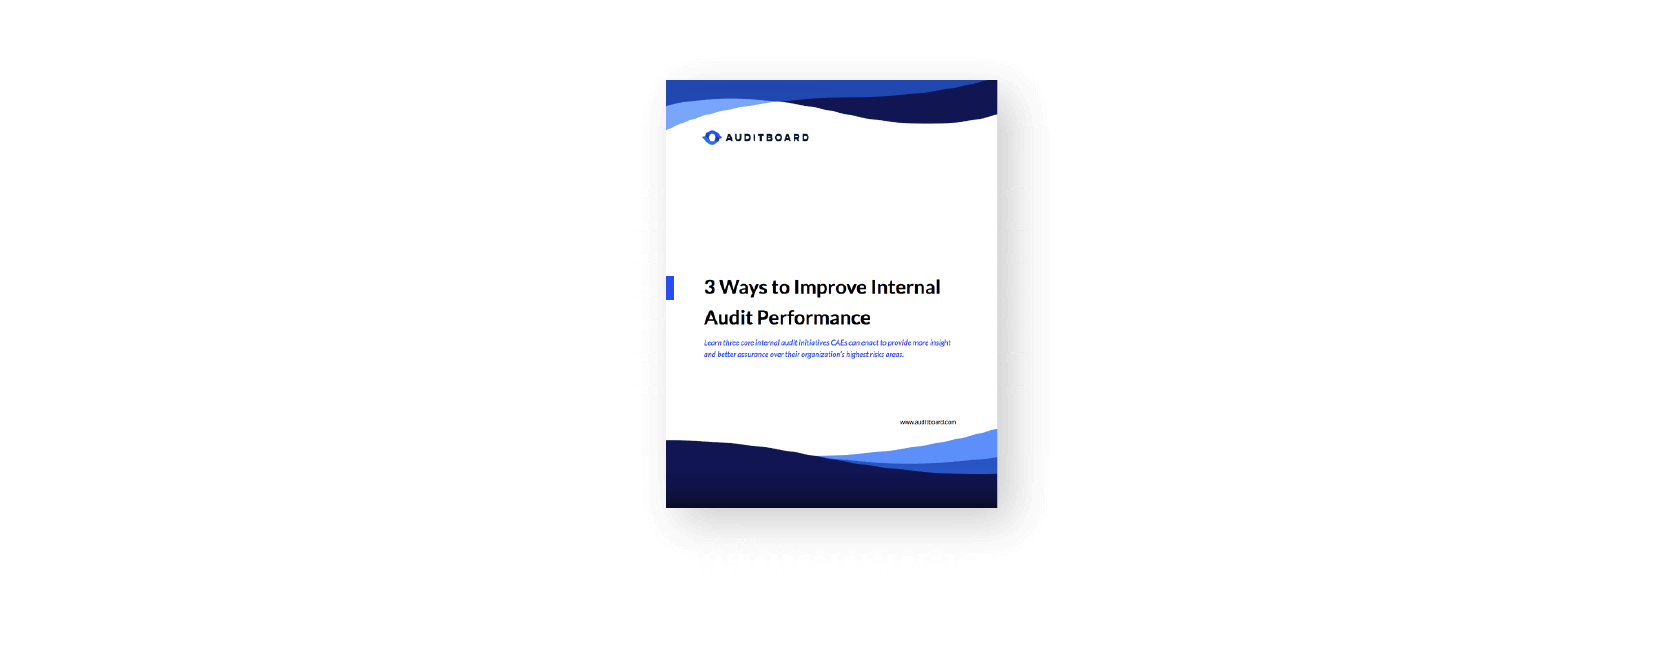 3 Ways to Improve Internal Audit Performance